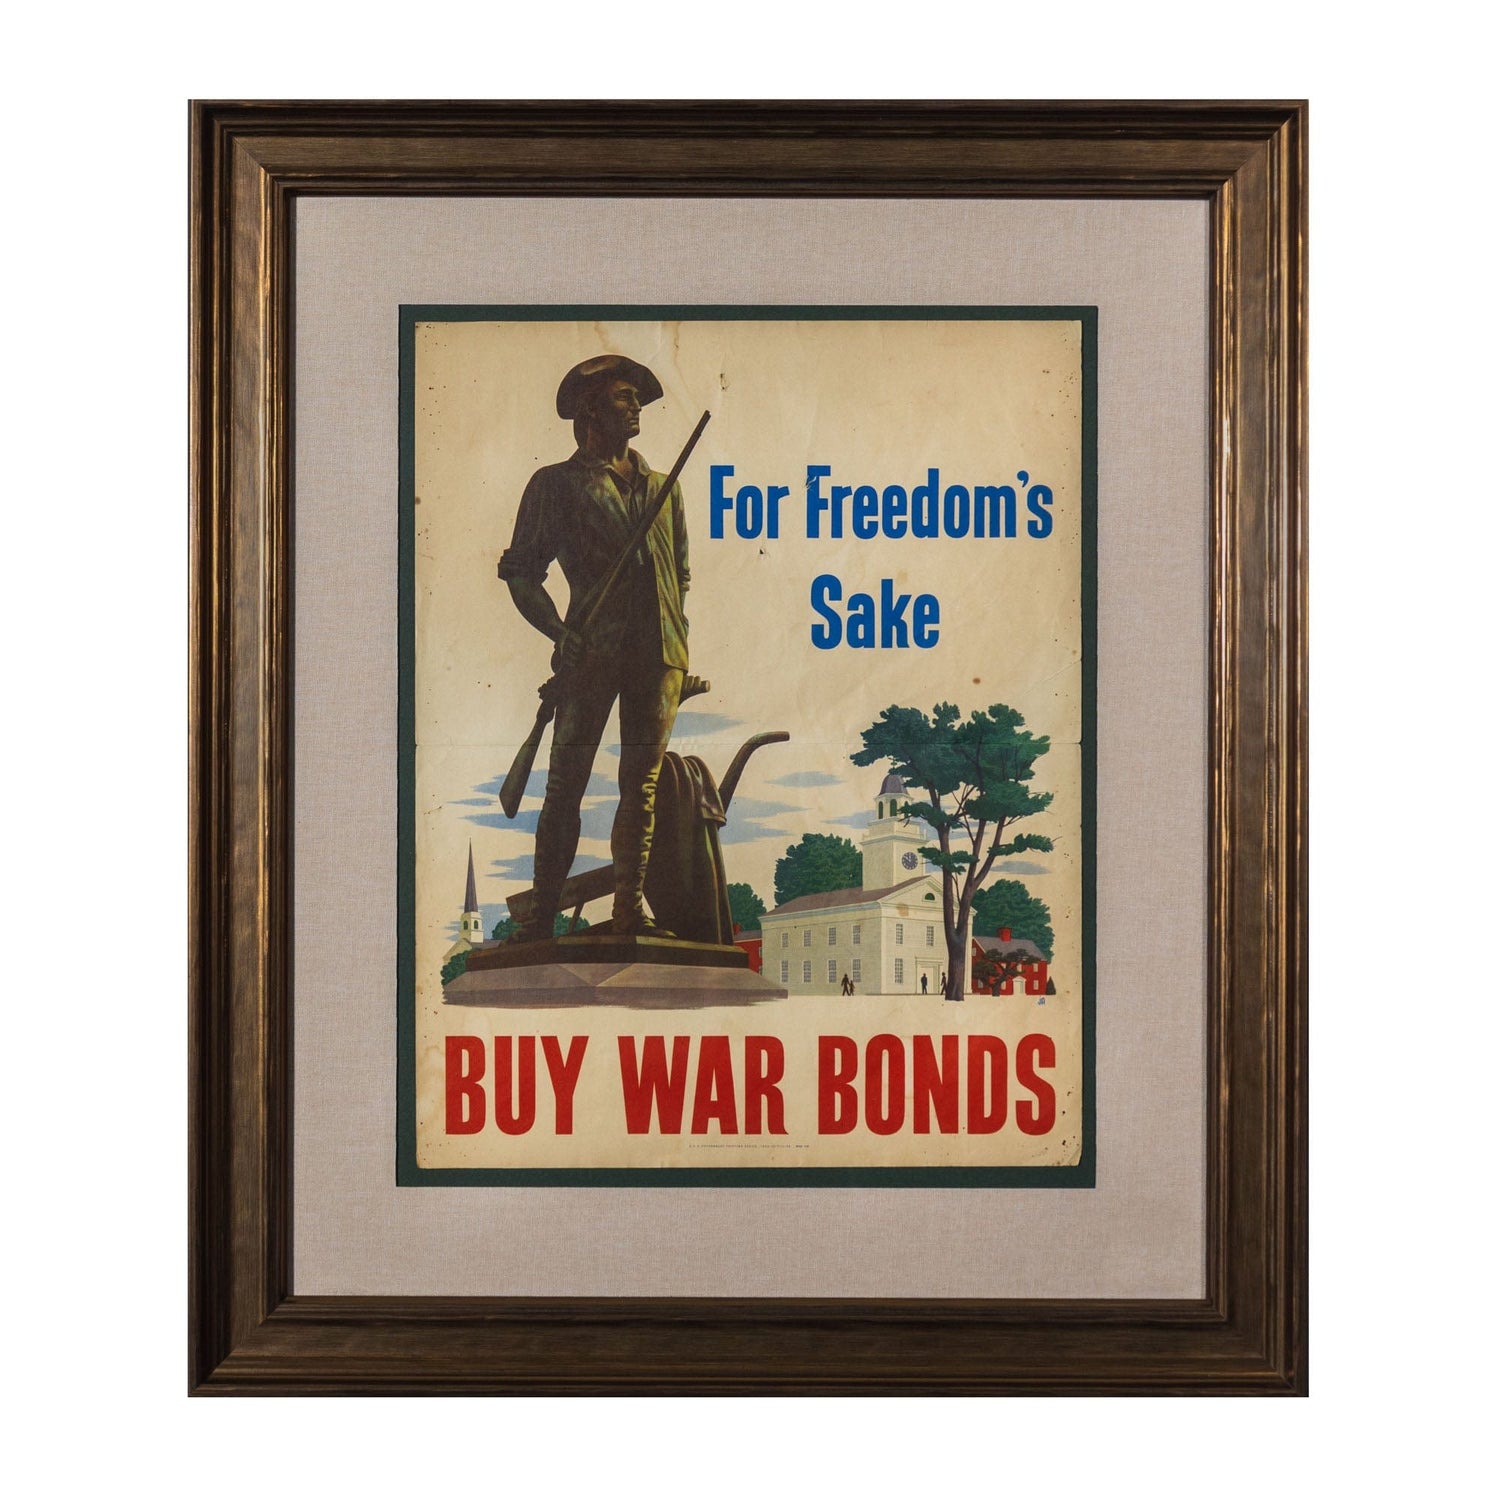 War Bonds: For Freedom Sake Frame